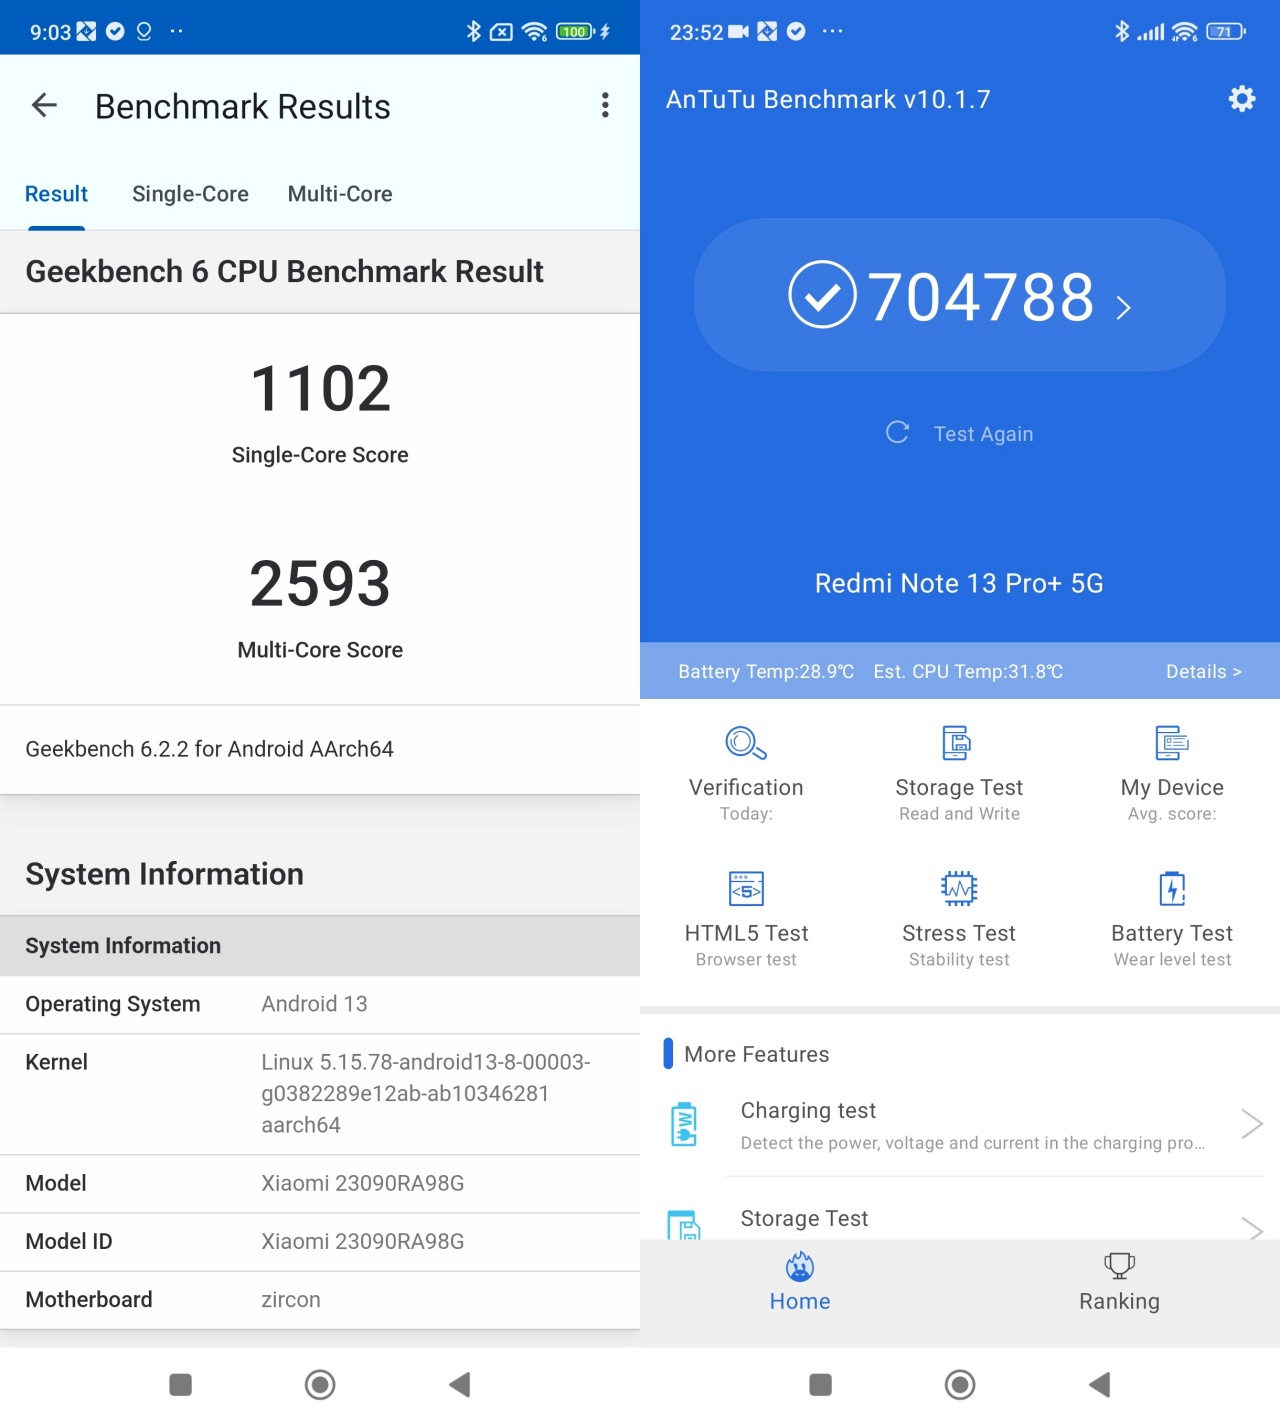 Redmi Note 13 Pro+ 5G Benchmark